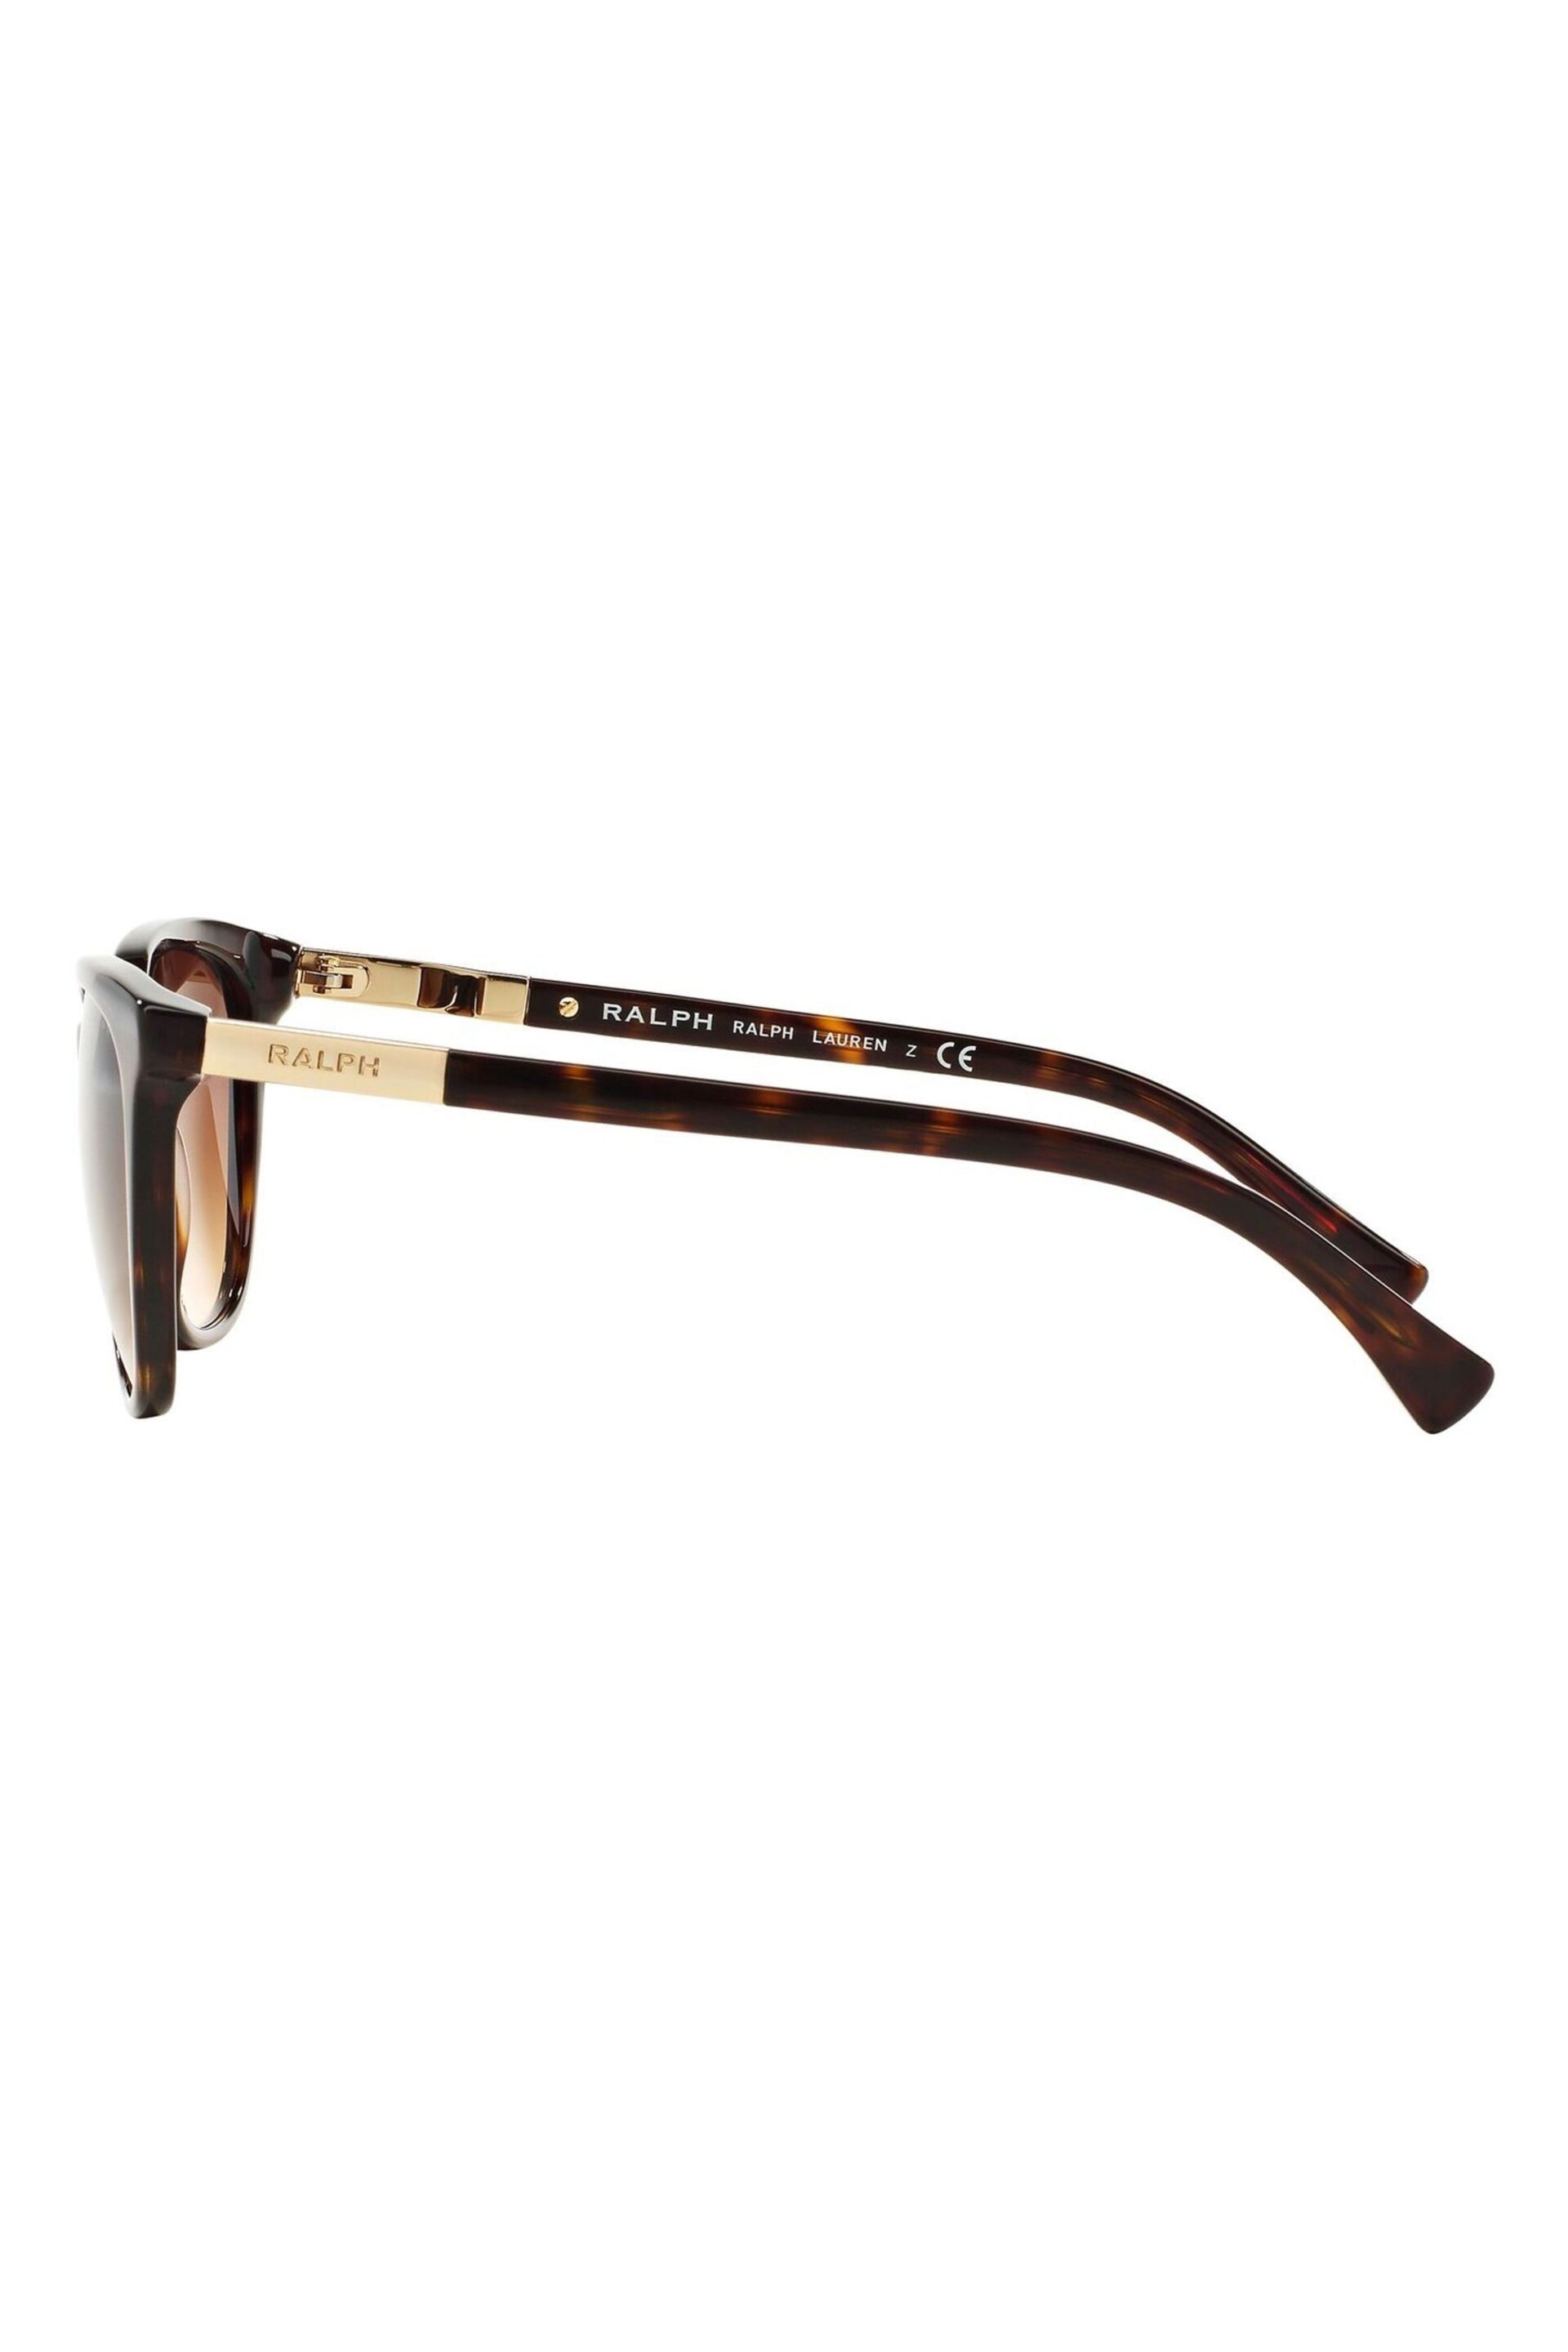 Ralph By Ralph Lauren Brown 0RA5206 Sunglasses - Image 8 of 12